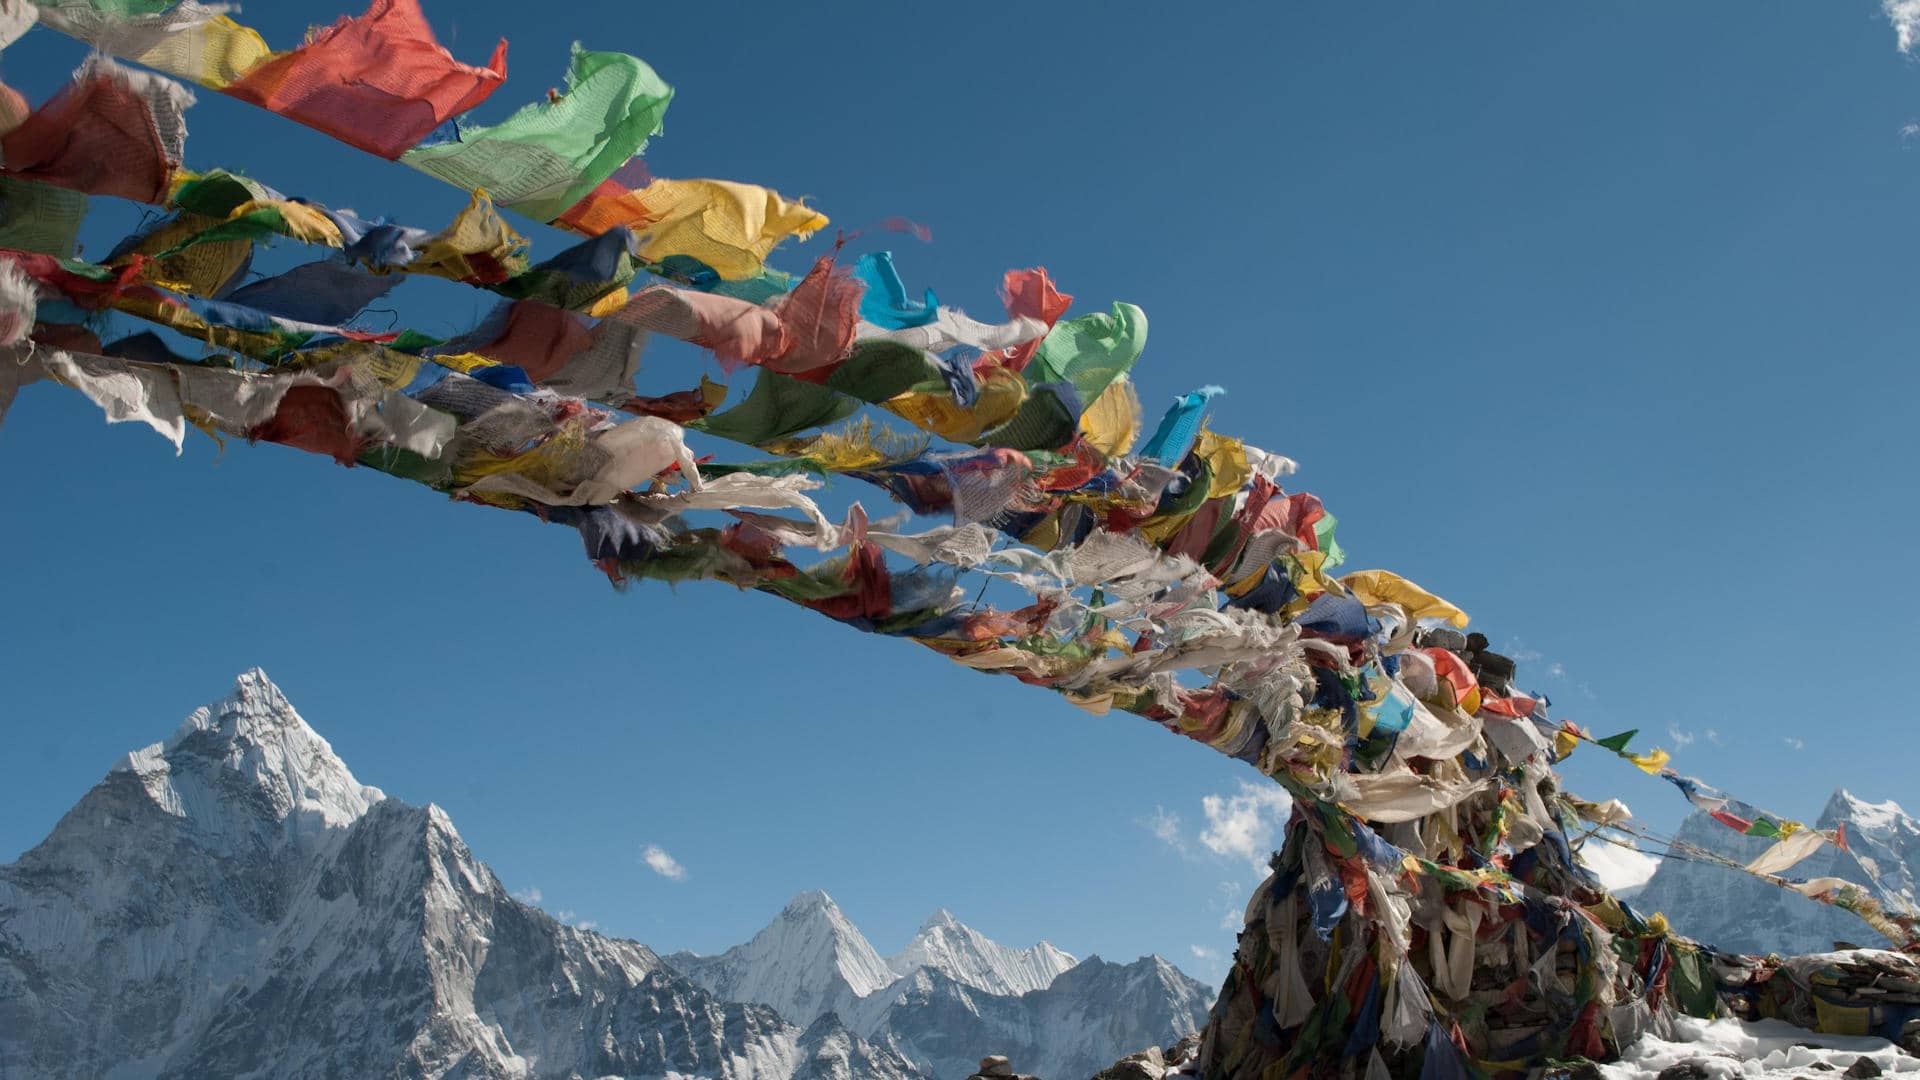 How are treks arranged in Nepal?